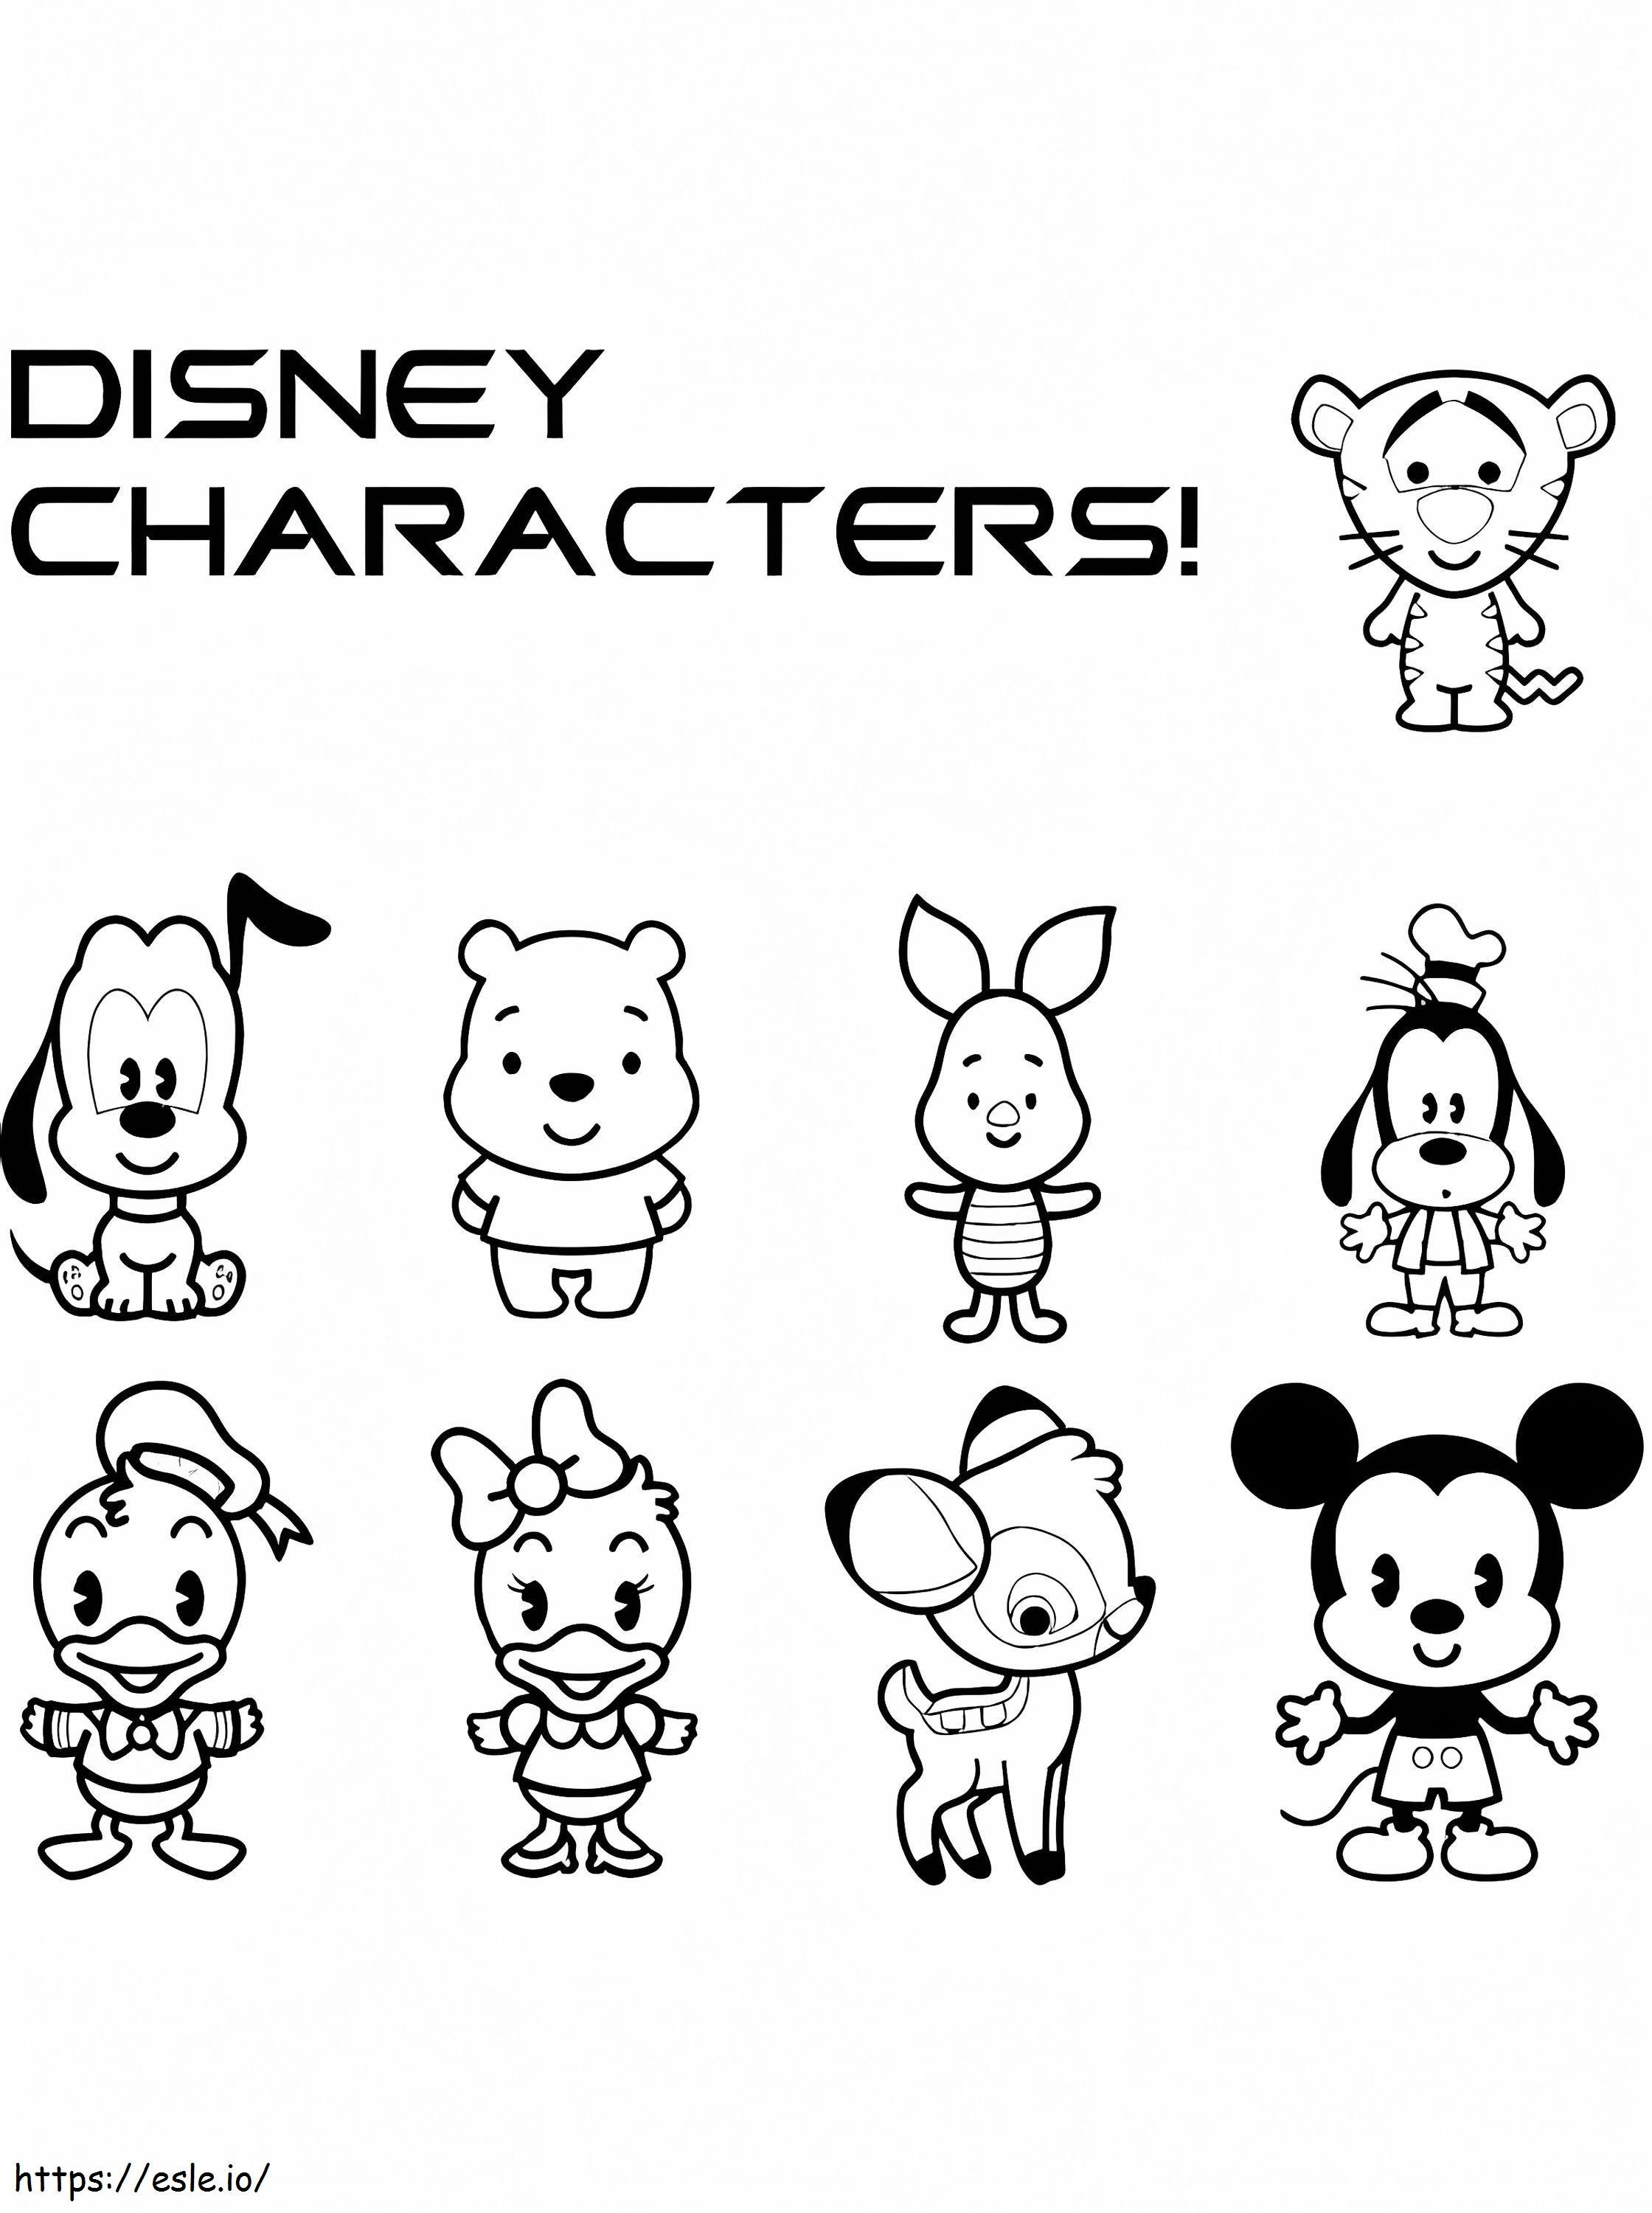 Personaje Disney Cuties de colorat